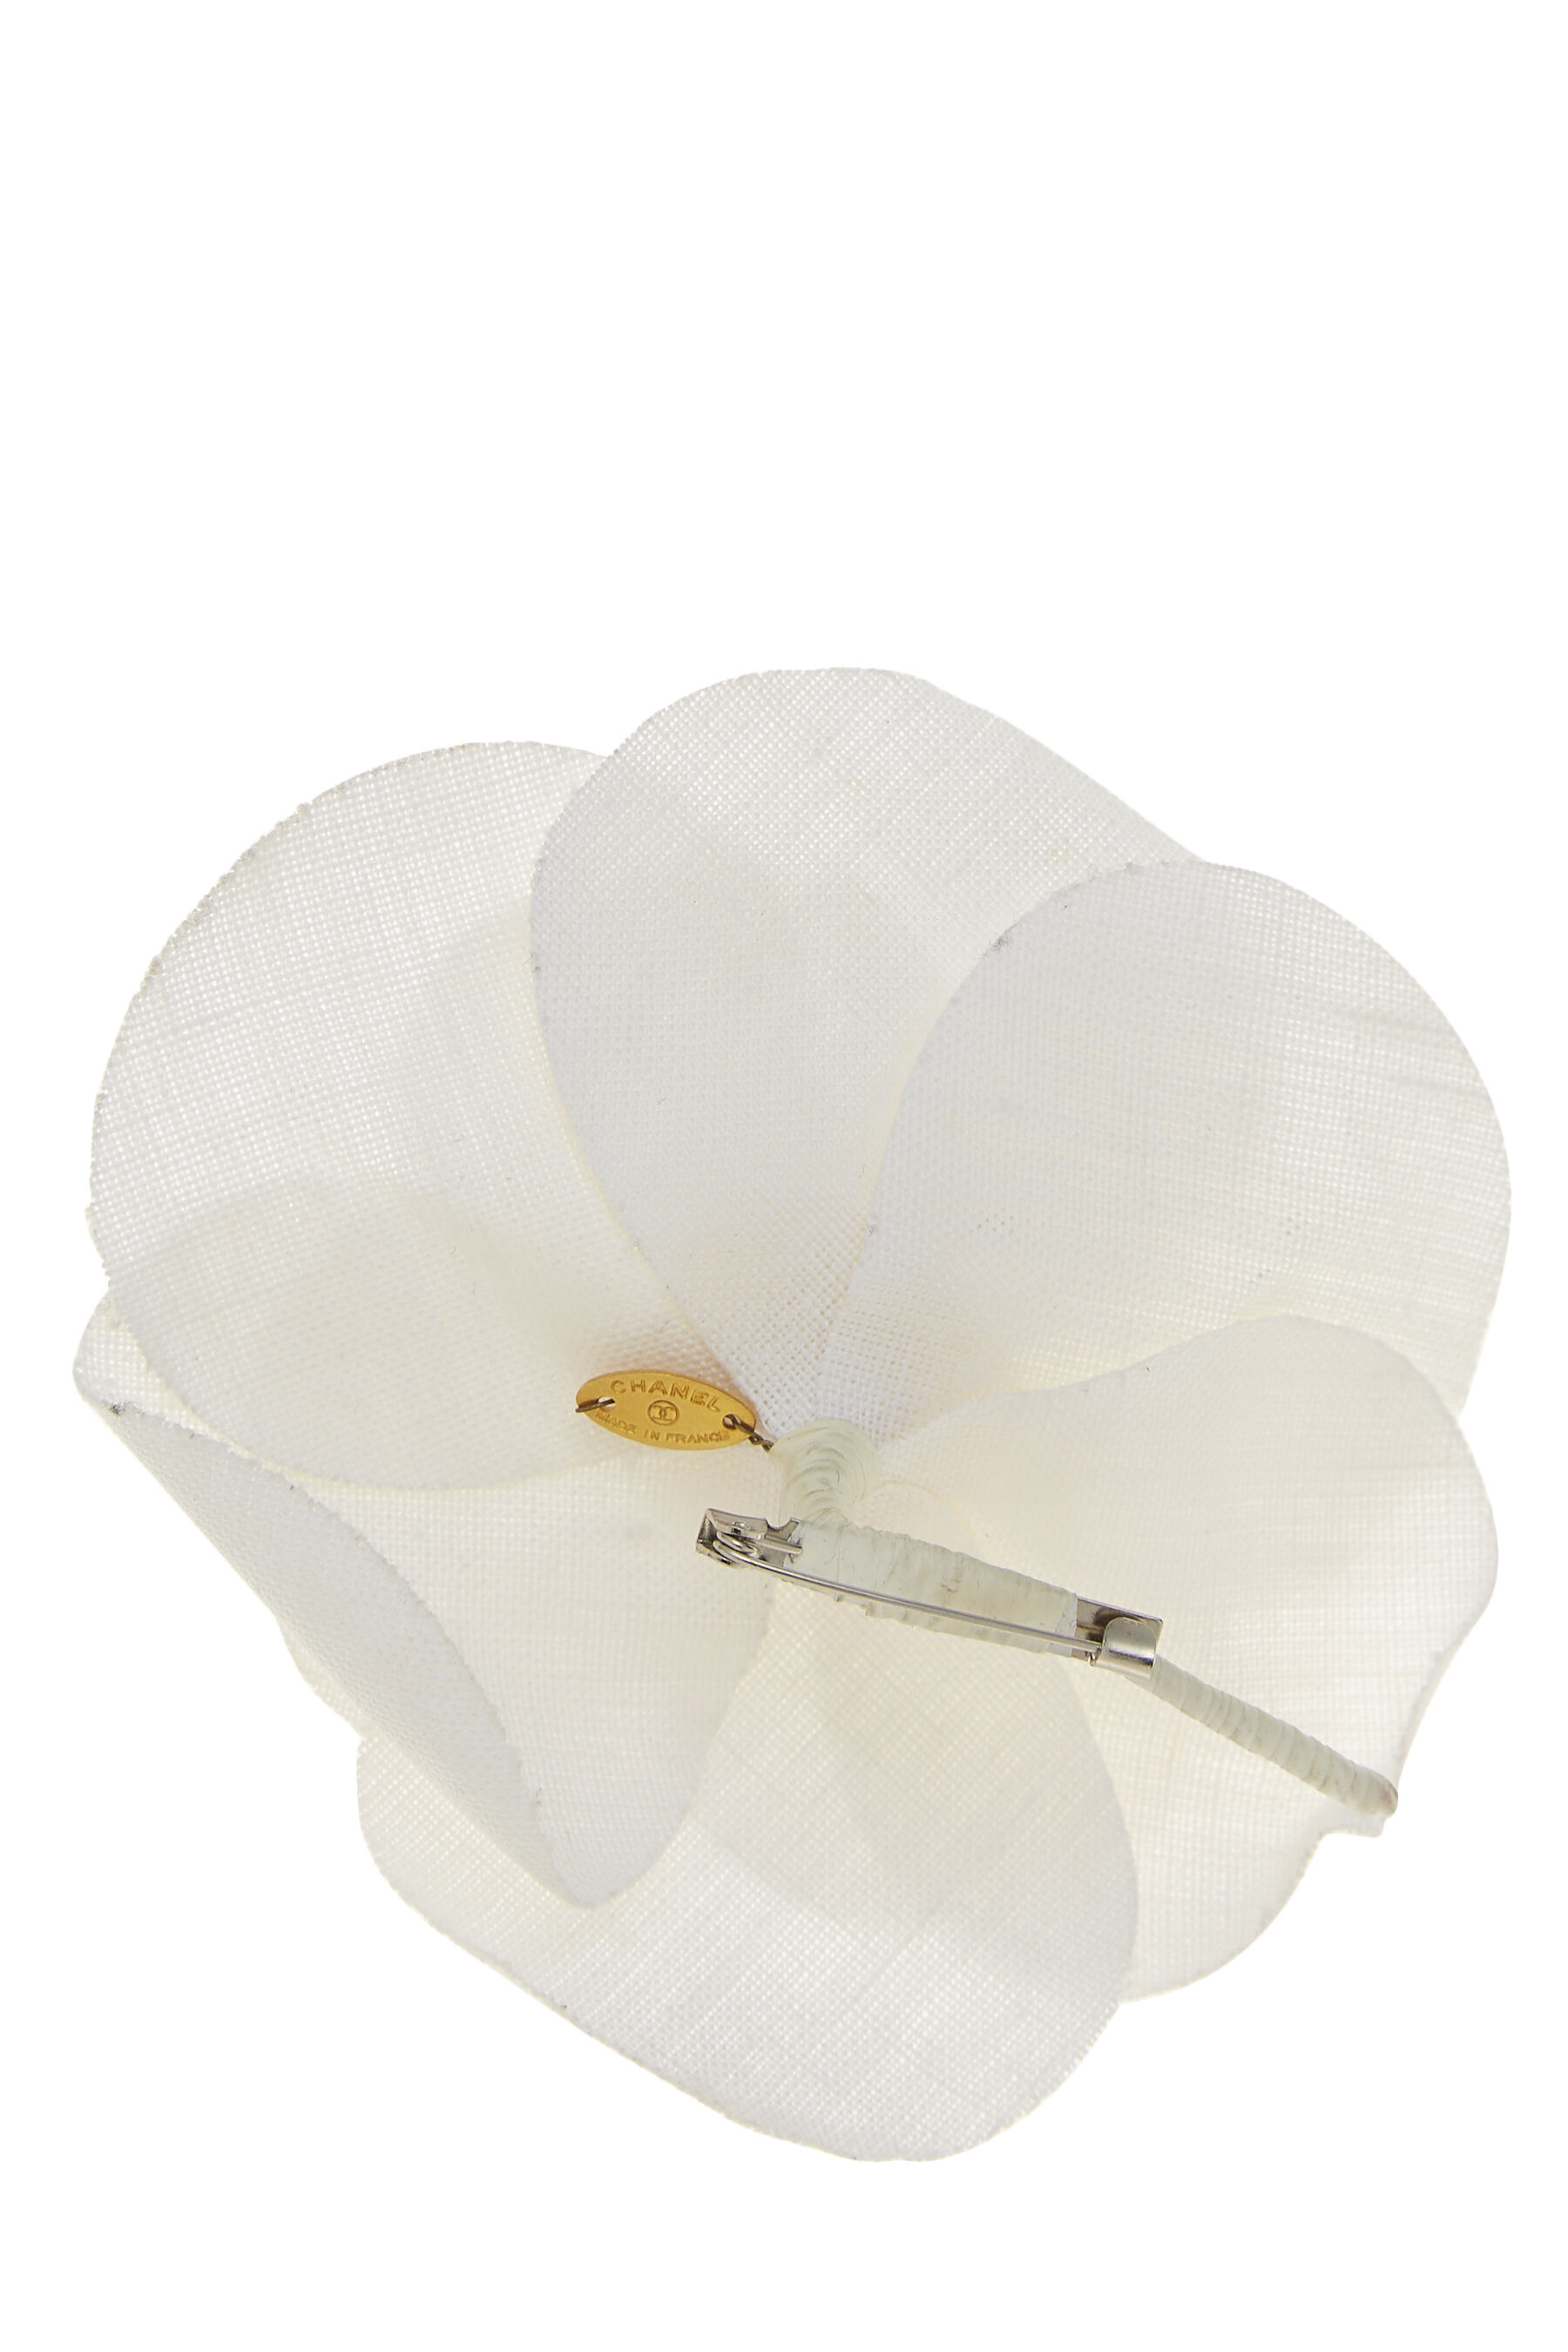 Chanel White Linen Camellia Brooch Q6A1SH5RWB000